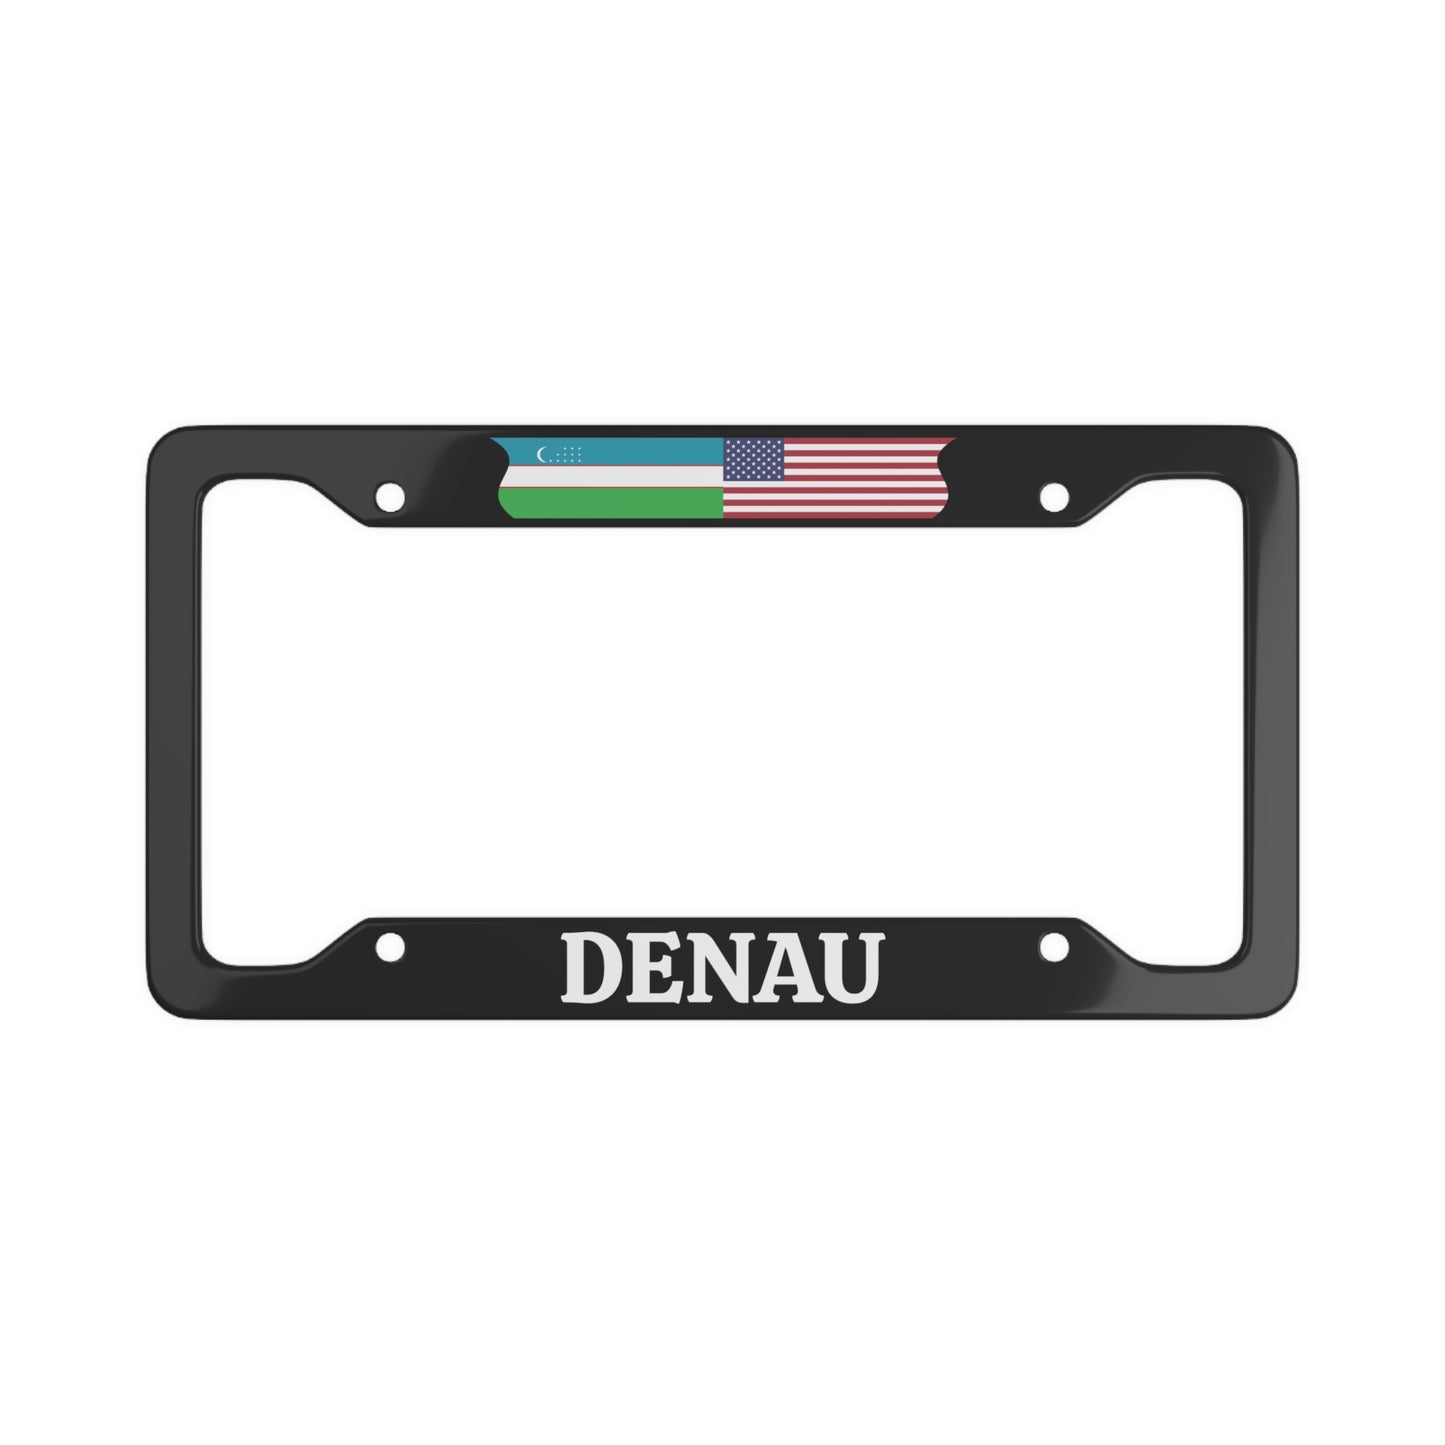 Denau License Plate Frame